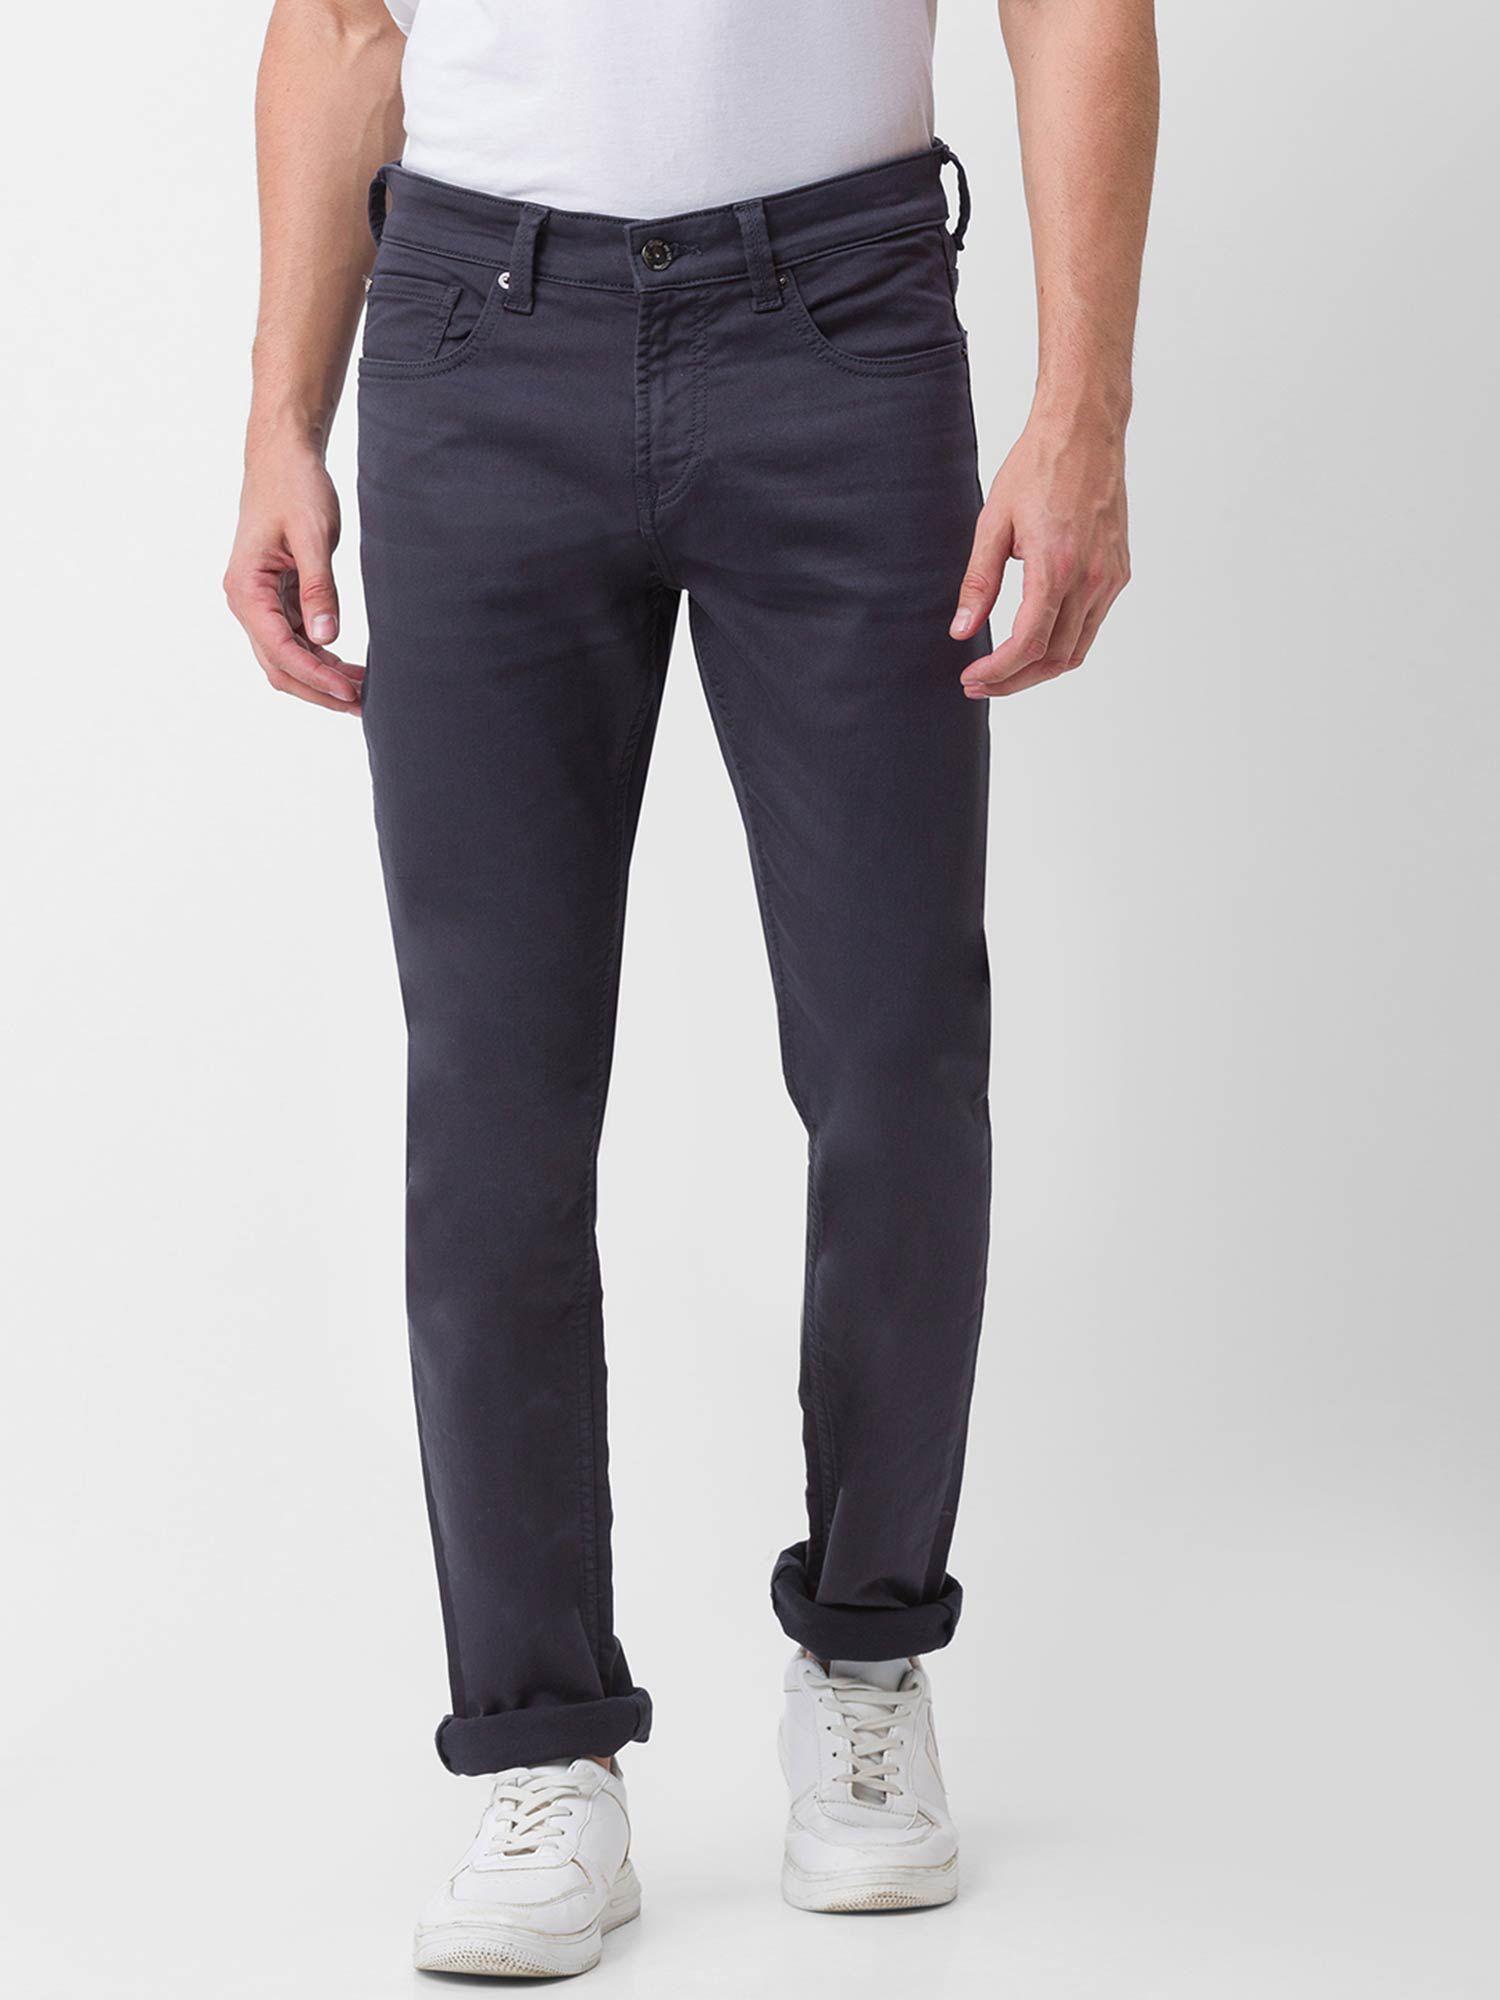 dark-grey-cotton-regular-fit-narrow-length-jeans-for-men-(rover)